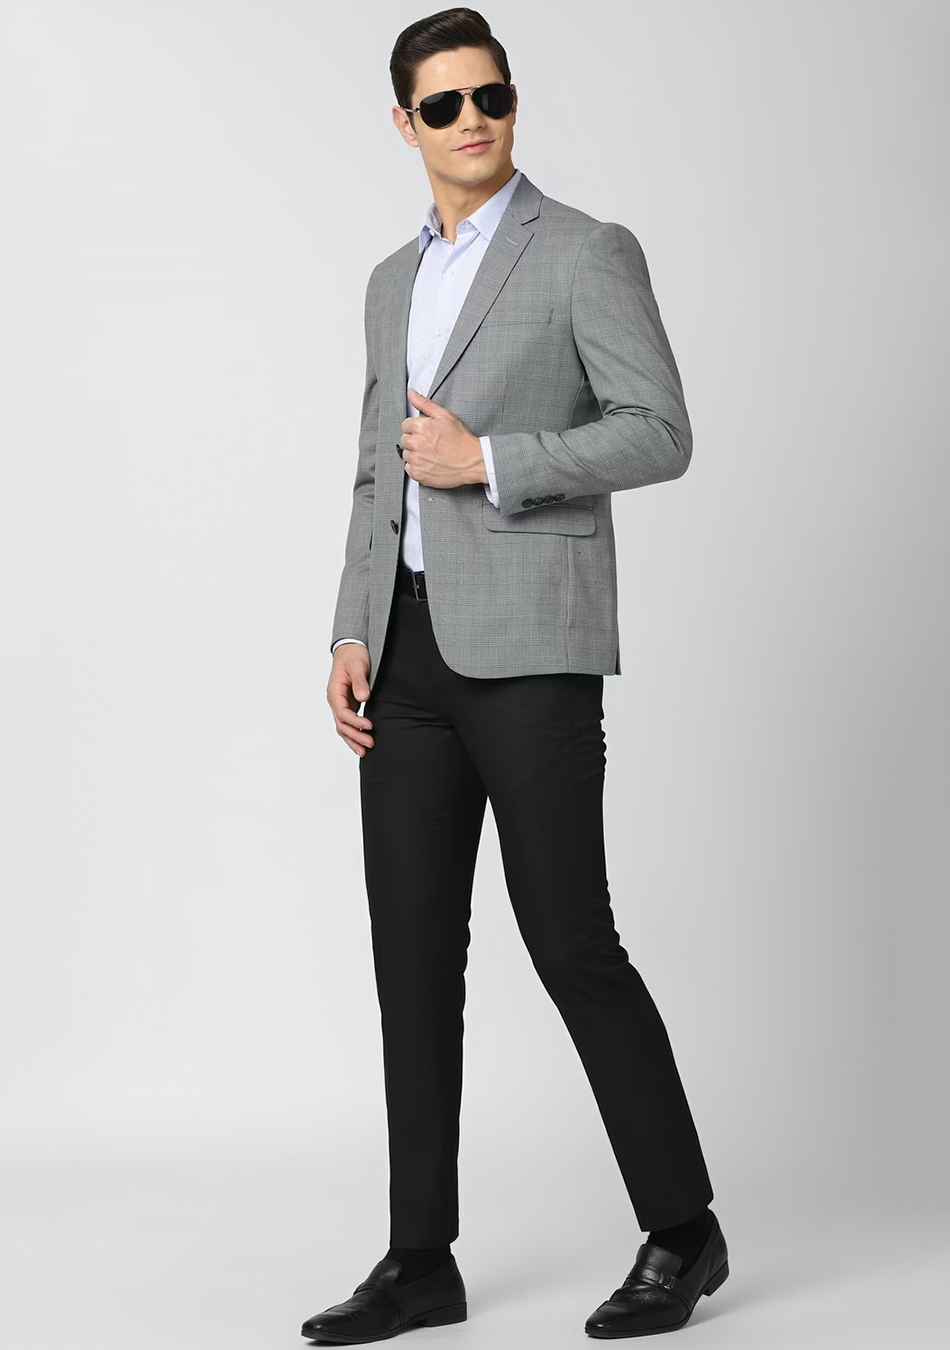 Light grey checkered blazer, light blue dress shirt, black dress pants, and black loafers